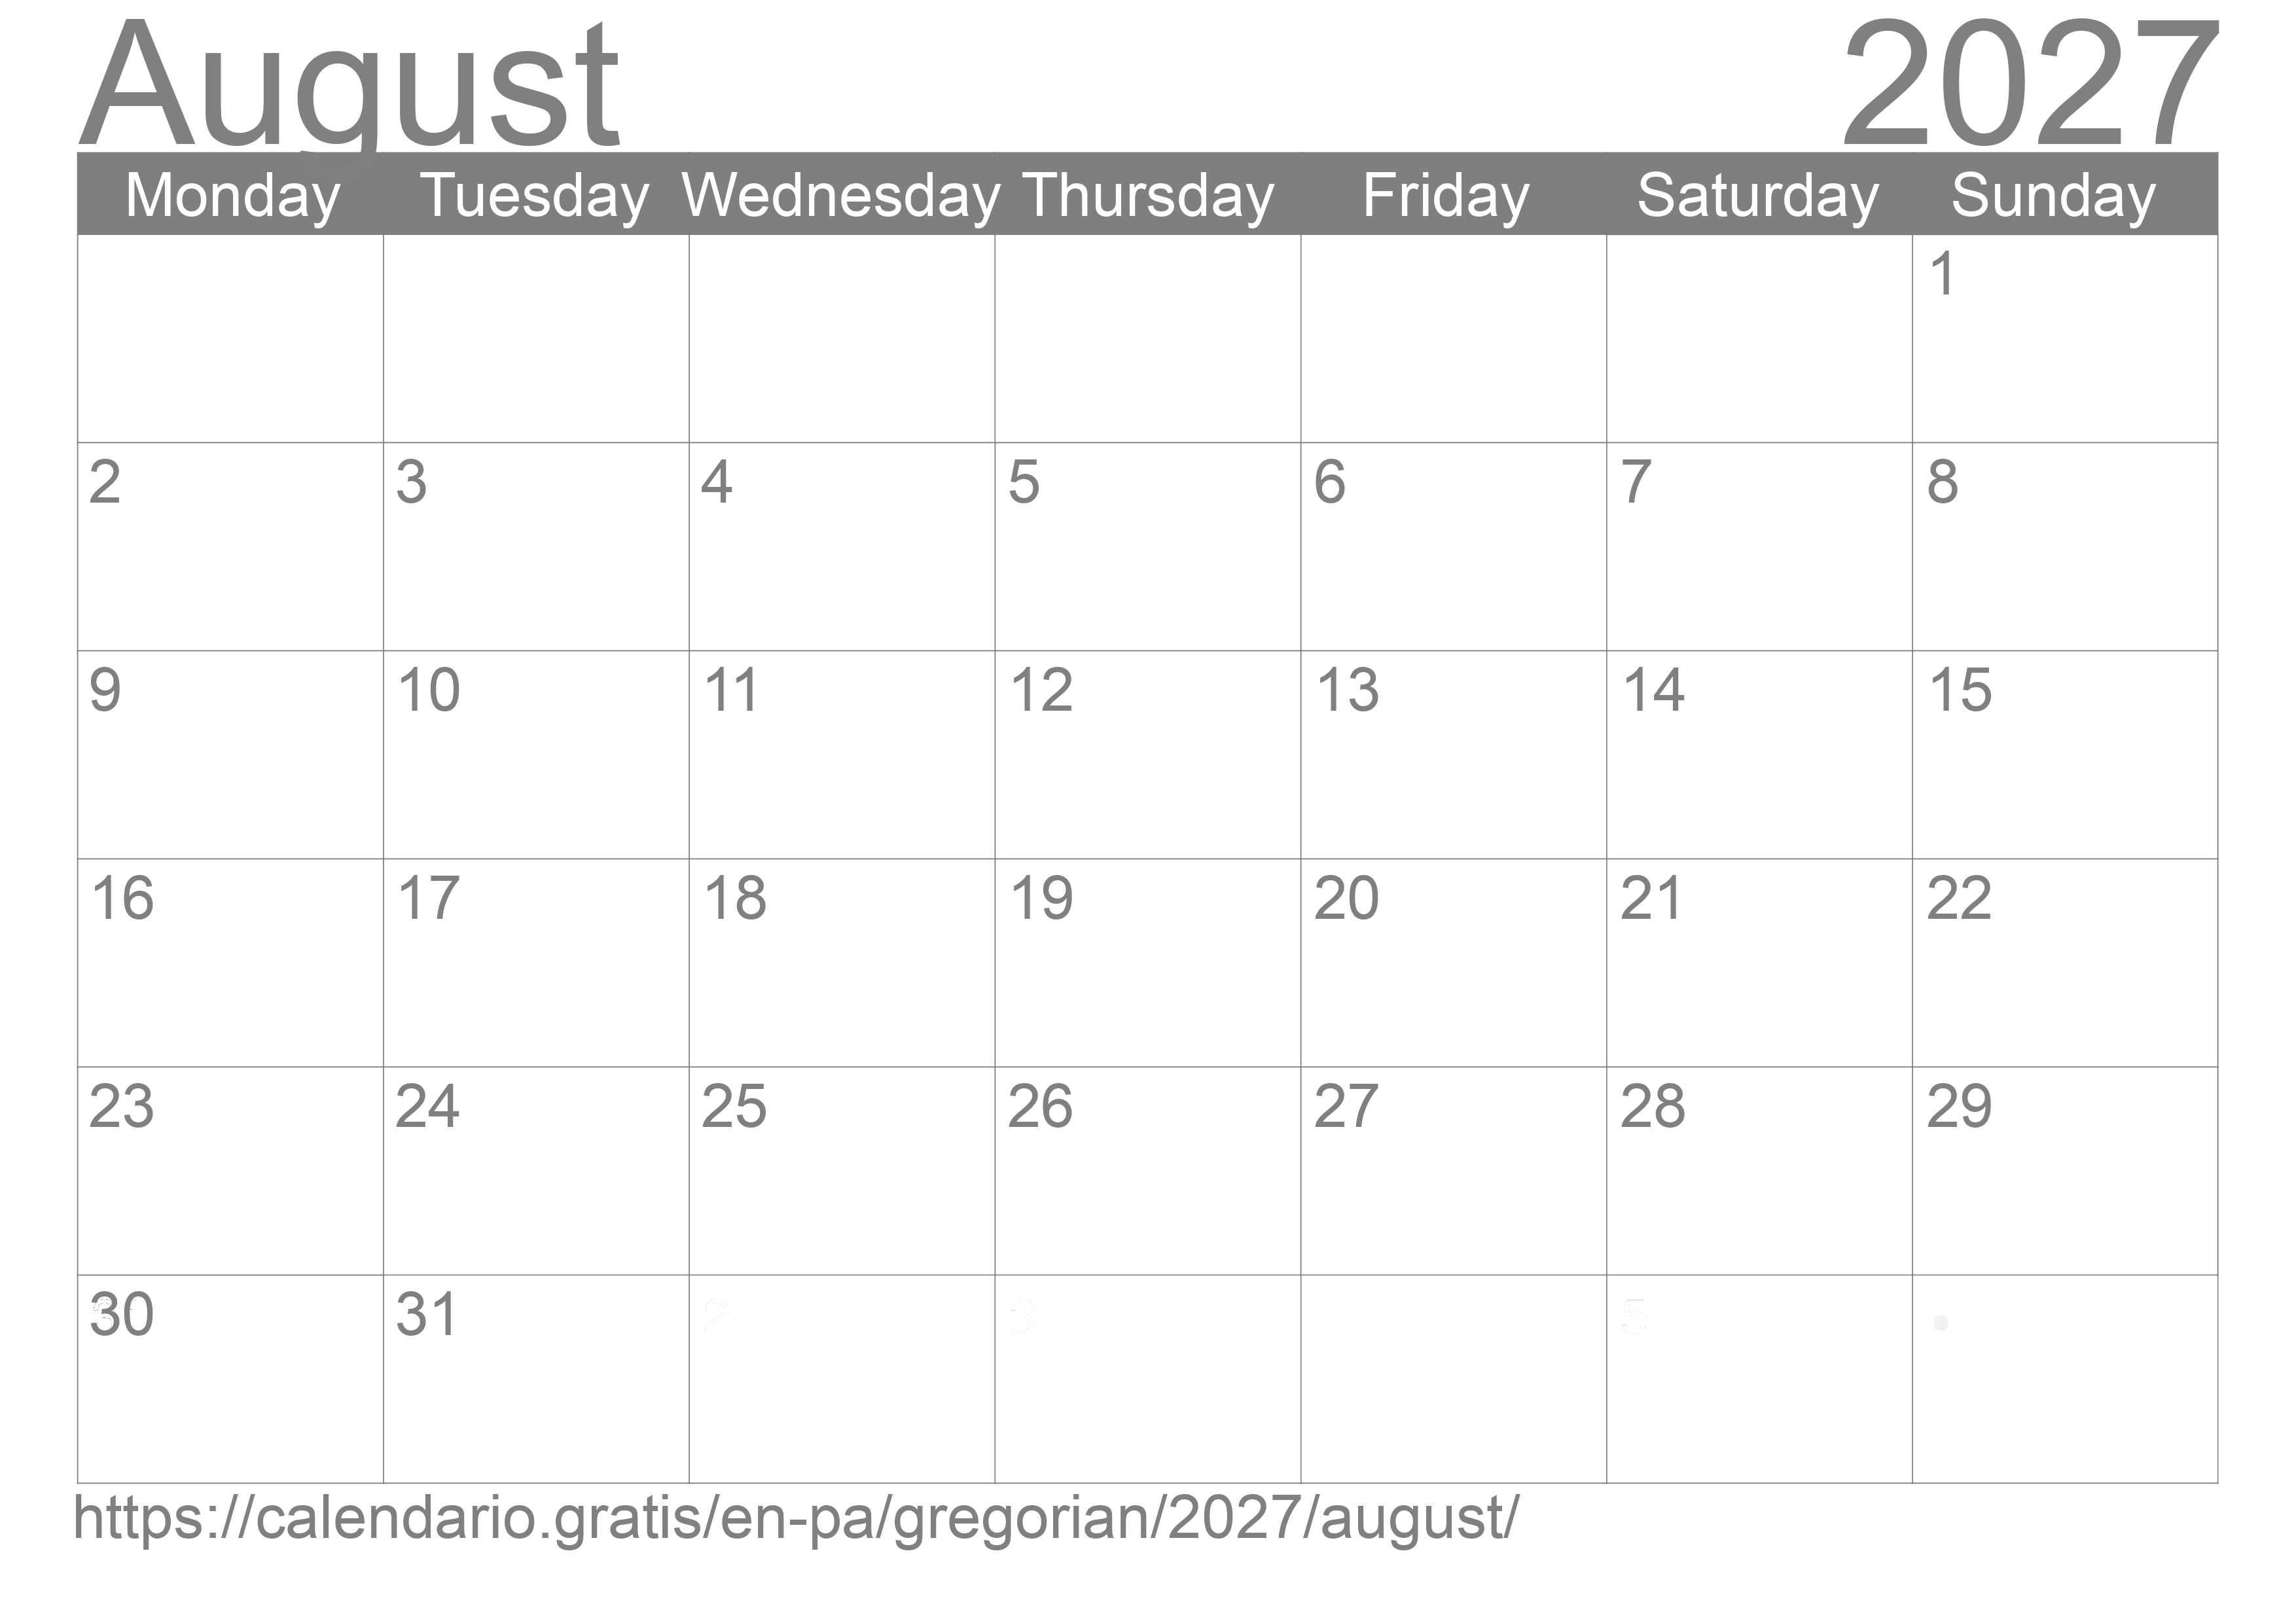 Calendar August 2027 to print